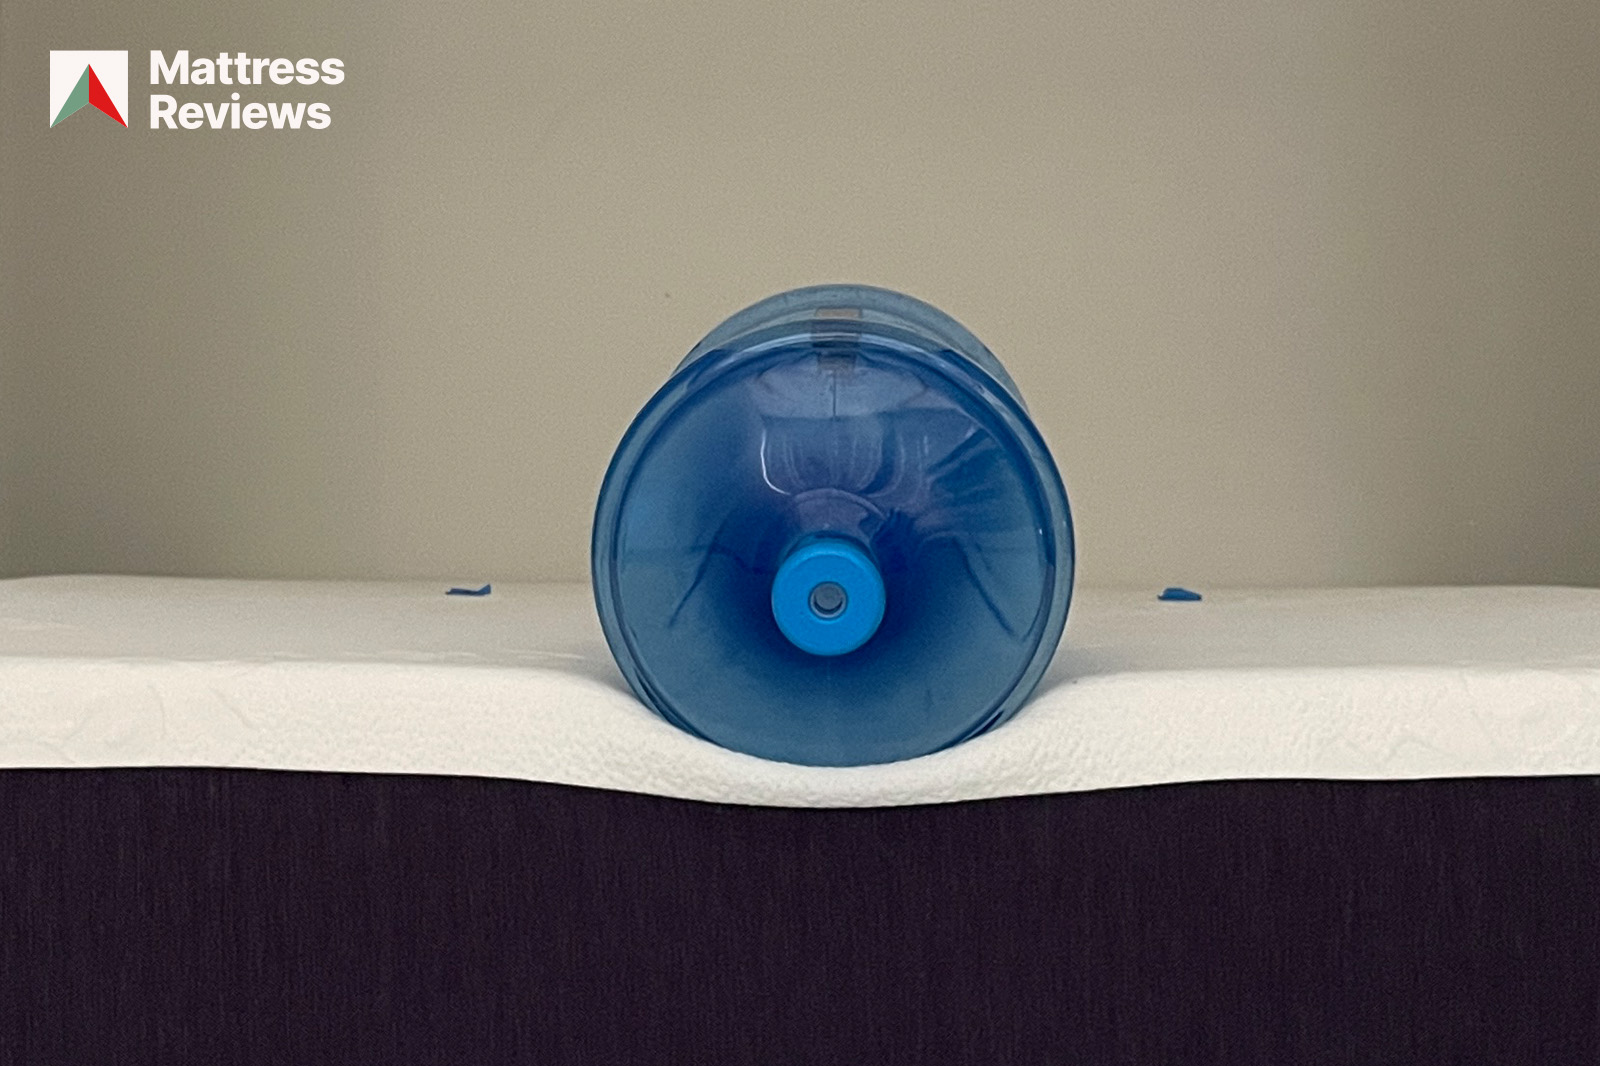 Water bottle on edge of Polysleep Origin mattress to demonstrate edge support